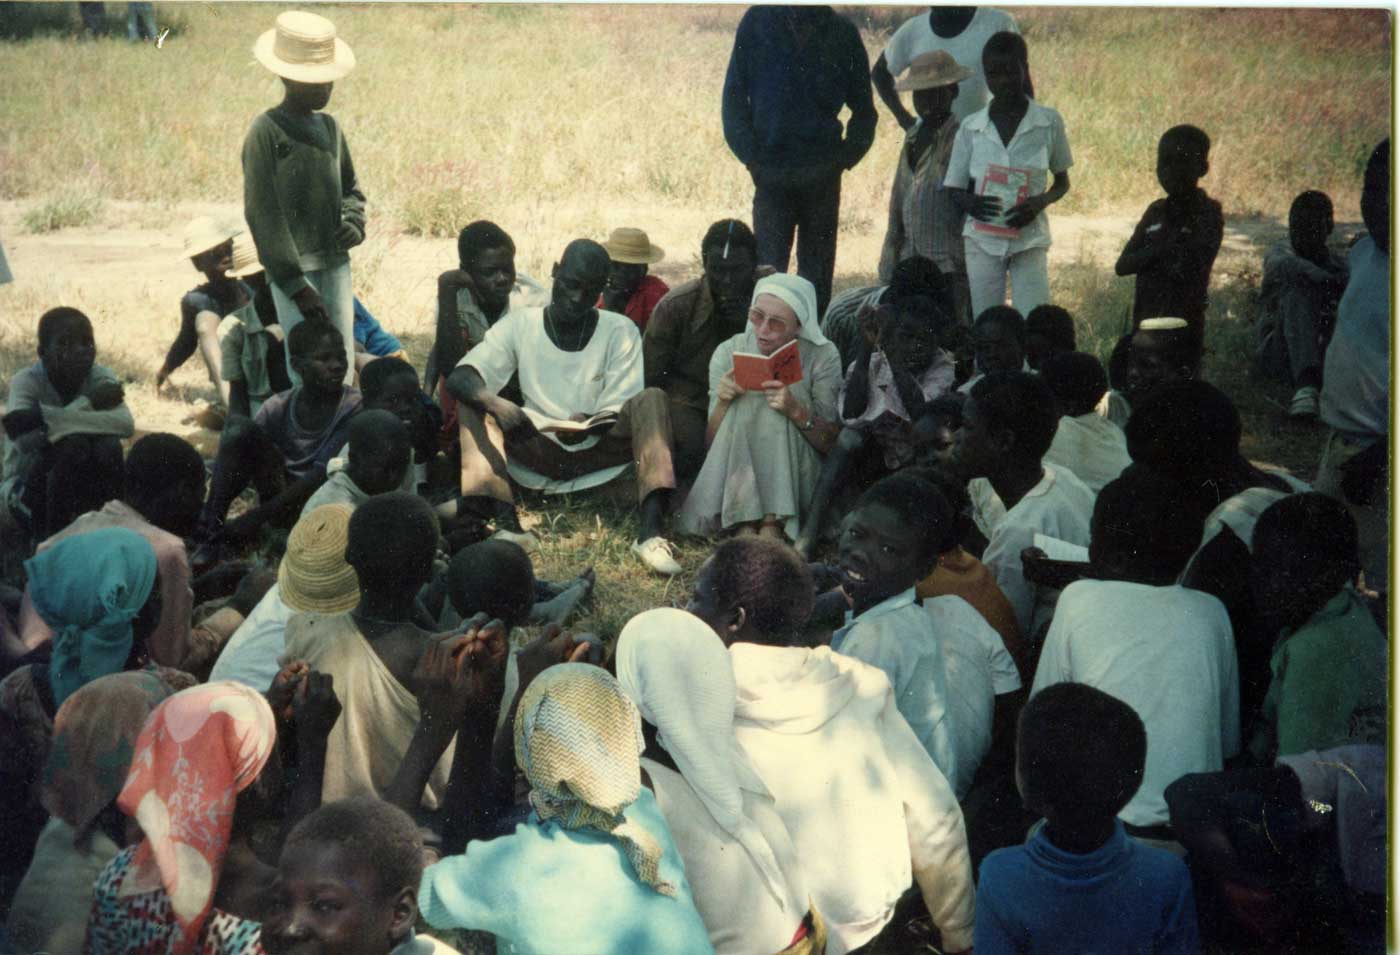 1986, Padermé – Cameroon